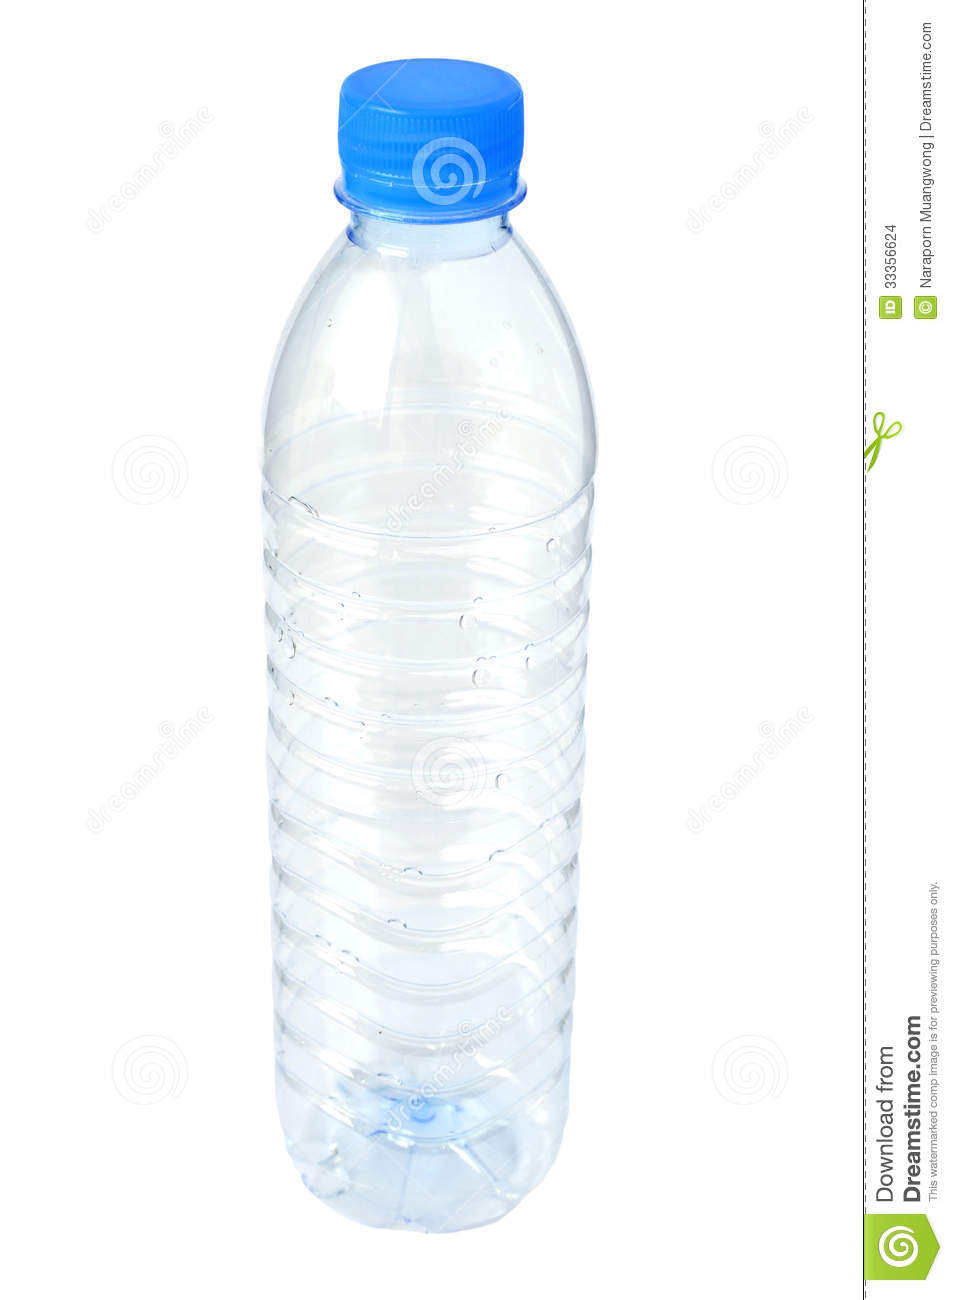 Empty Plastic Water Bottle Stock Images   Image  33356624